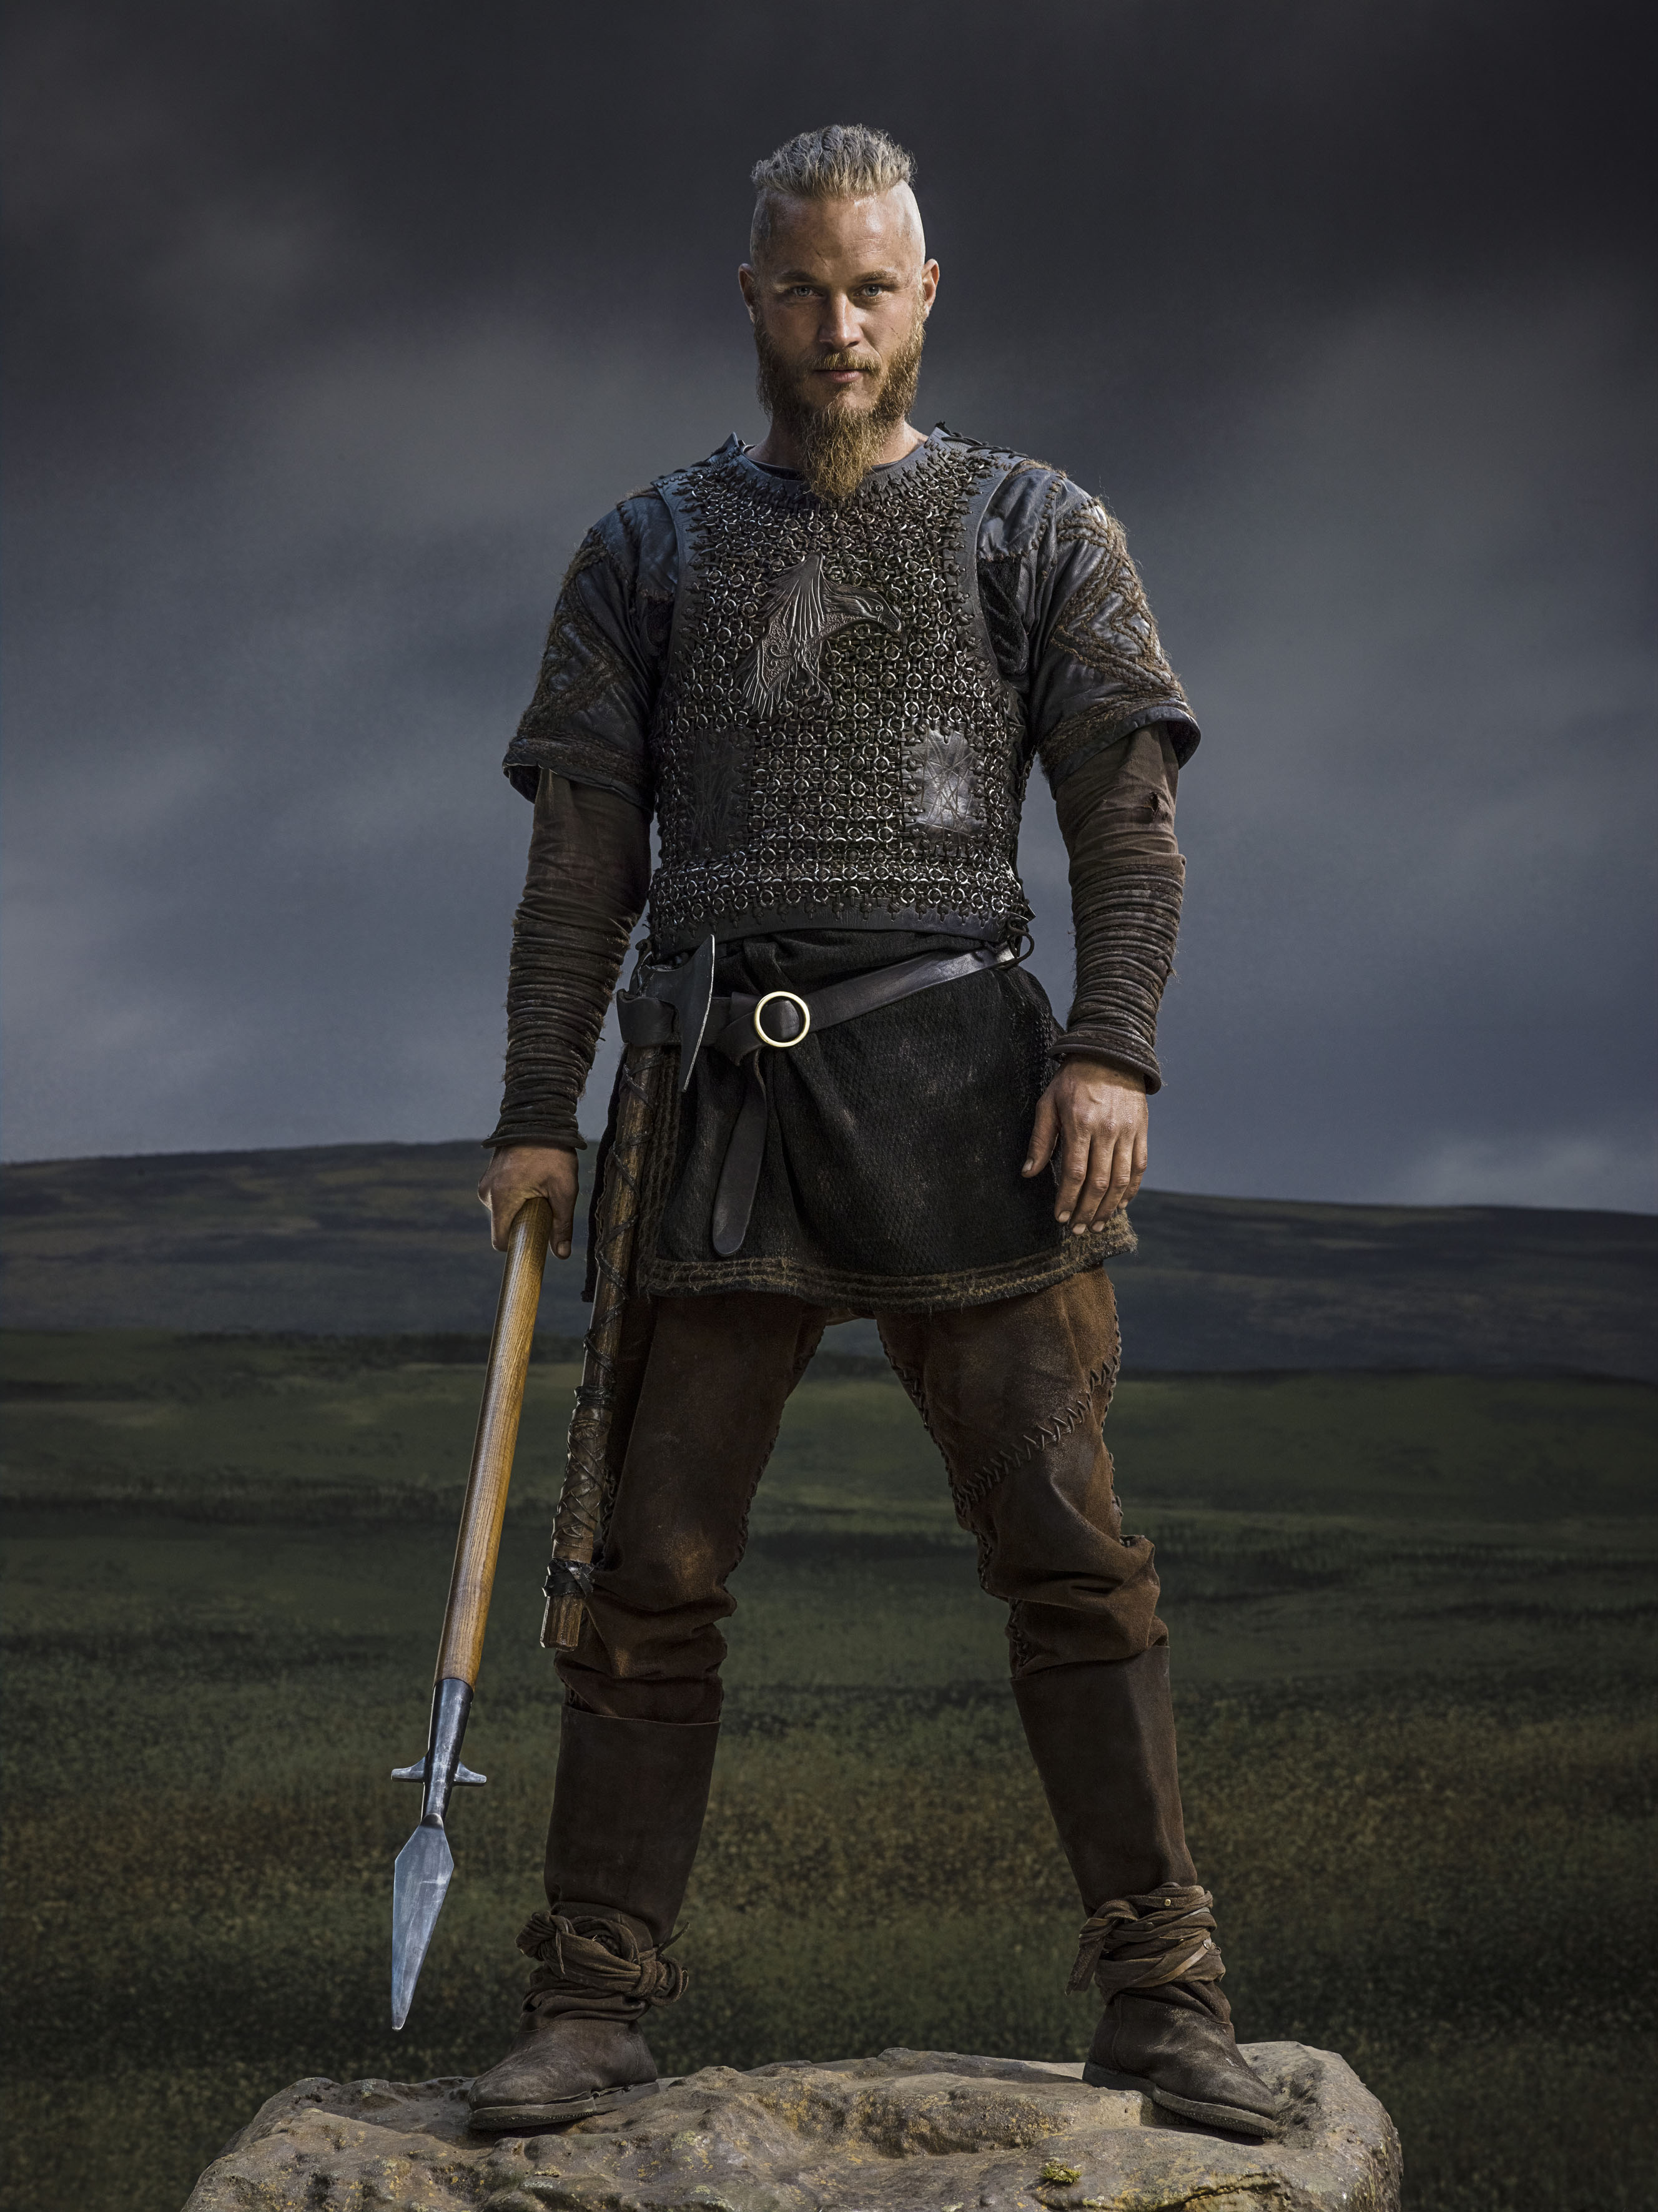  Vikings Season 2 Ragnar Lothbrok official picture